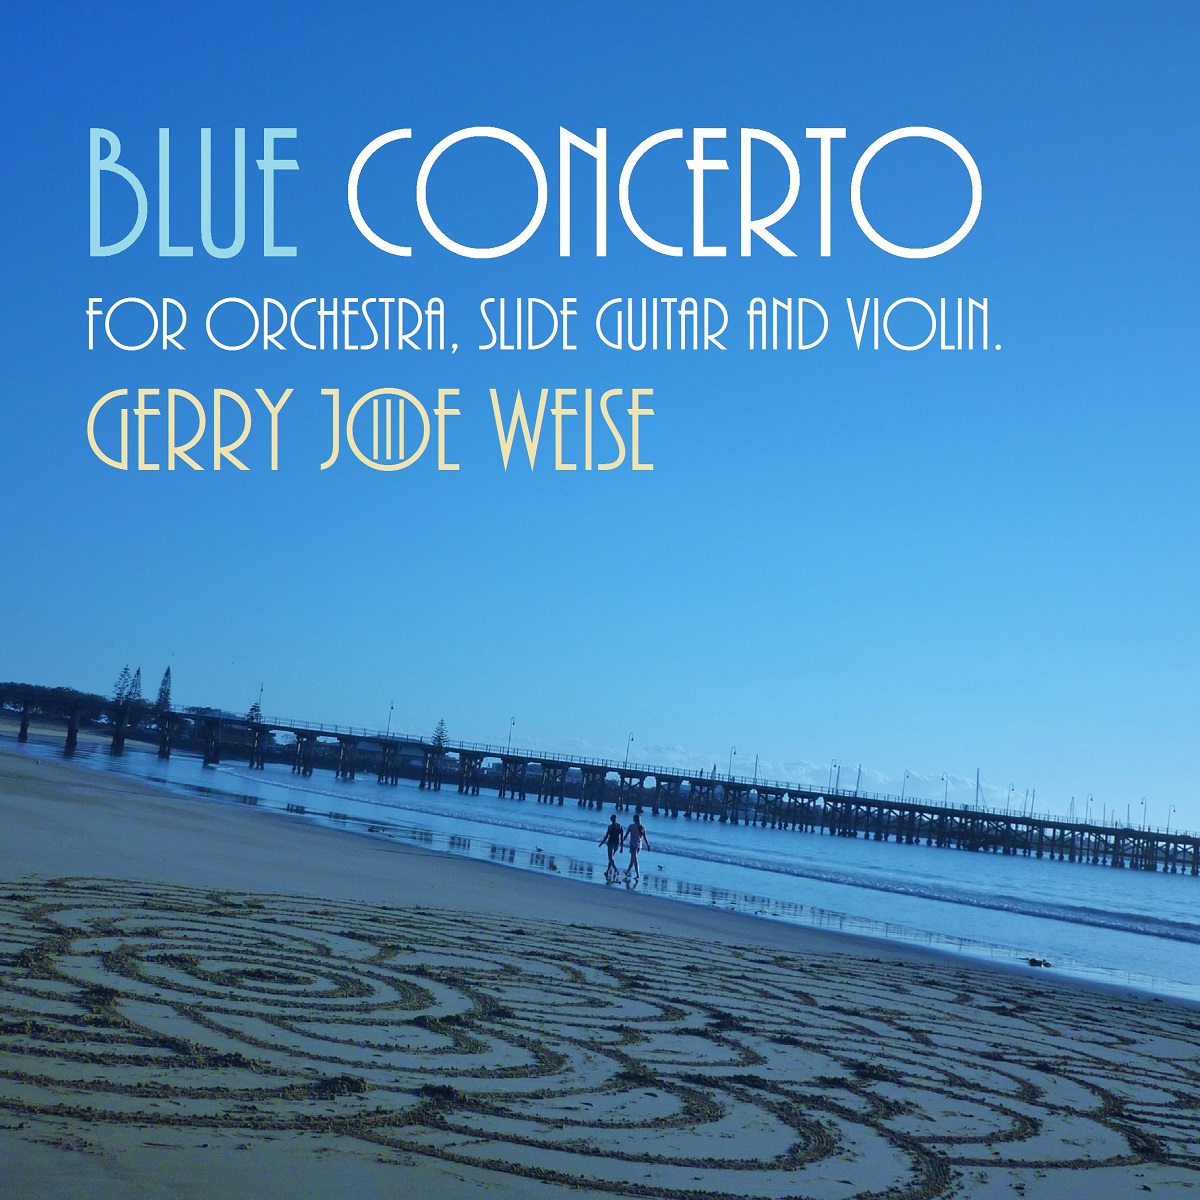 Blue Concerto for Orchestra (Slide Guitar and Violin), 2016